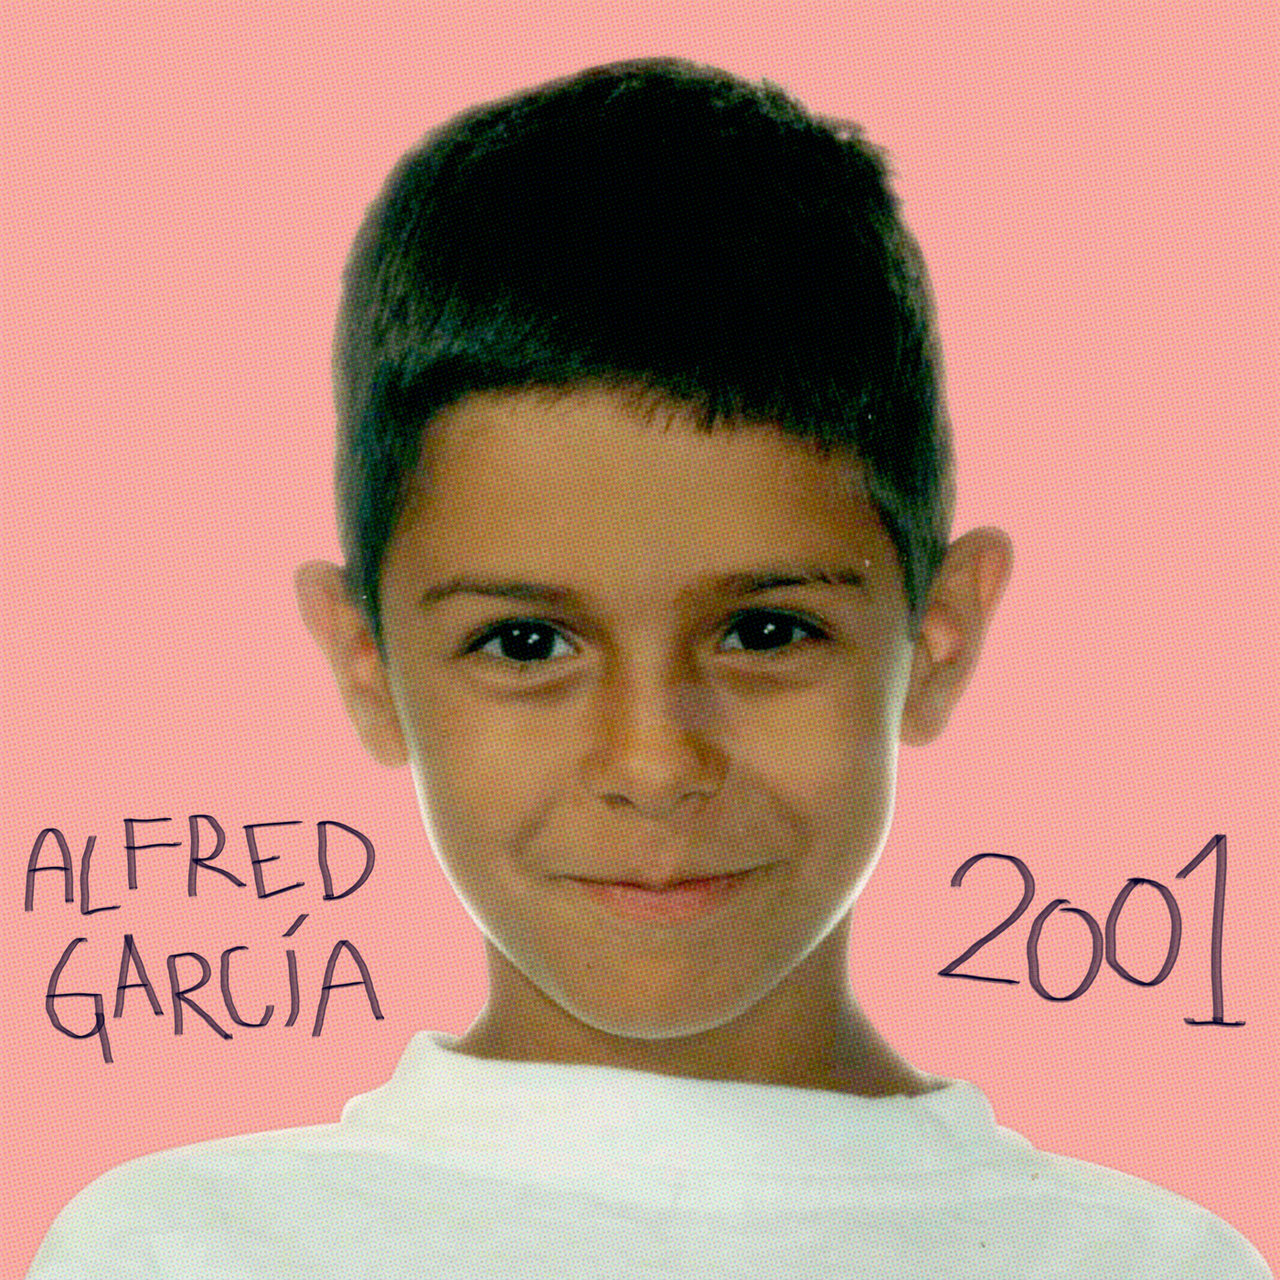 Alfred García — 2001 cover artwork